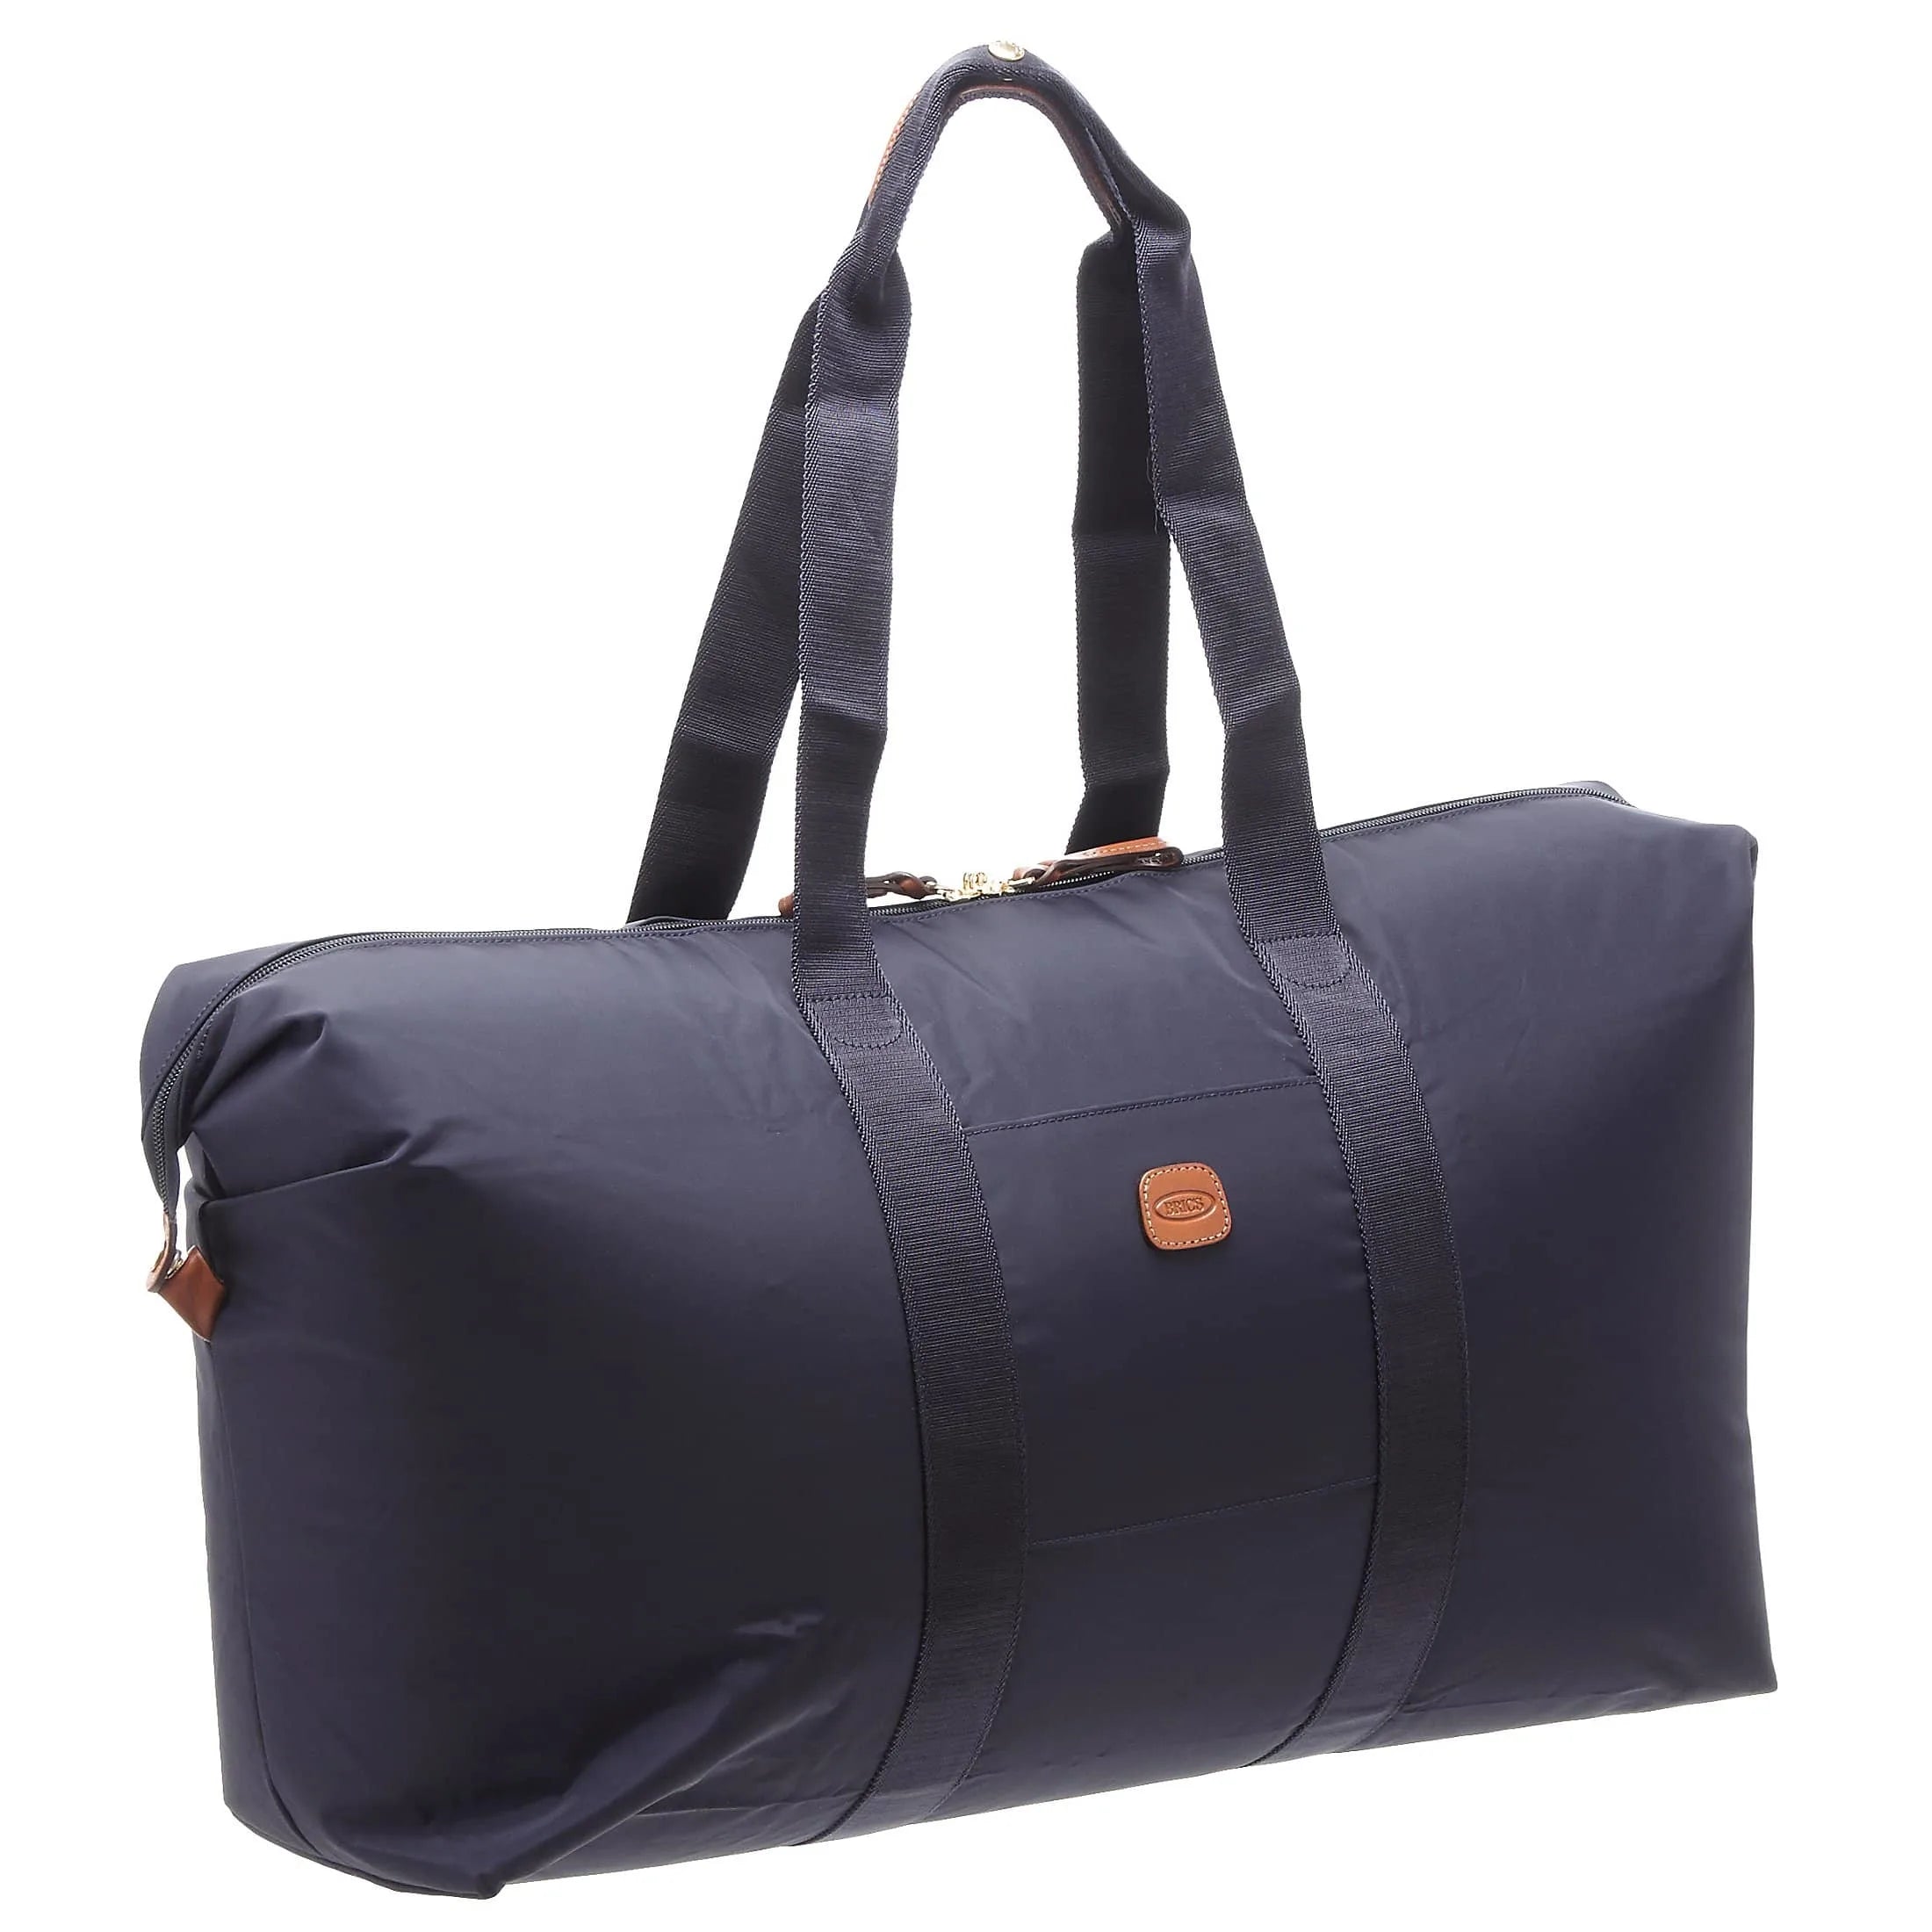 Brics X-Bag sac de voyage 55 cm - olive